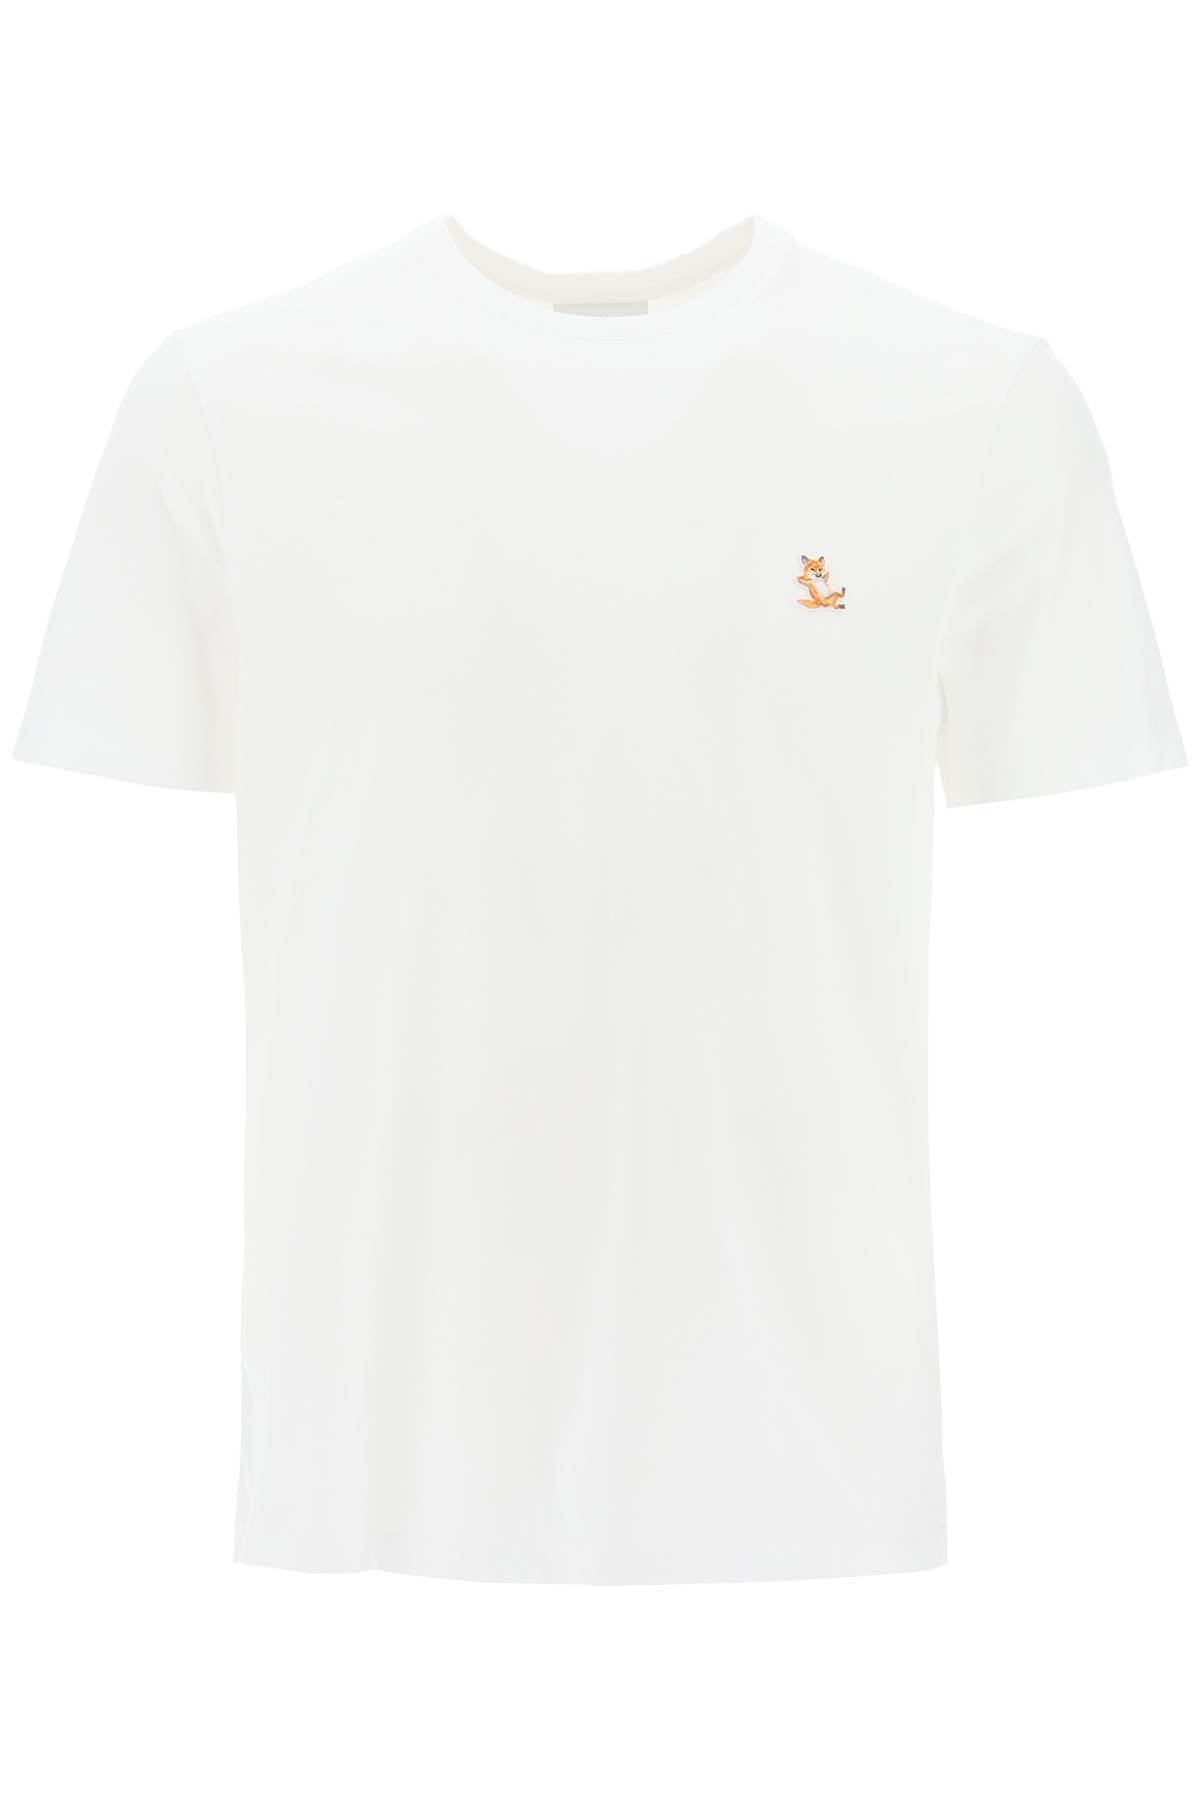 Maison Kitsuné Chillax Fox T-shirt